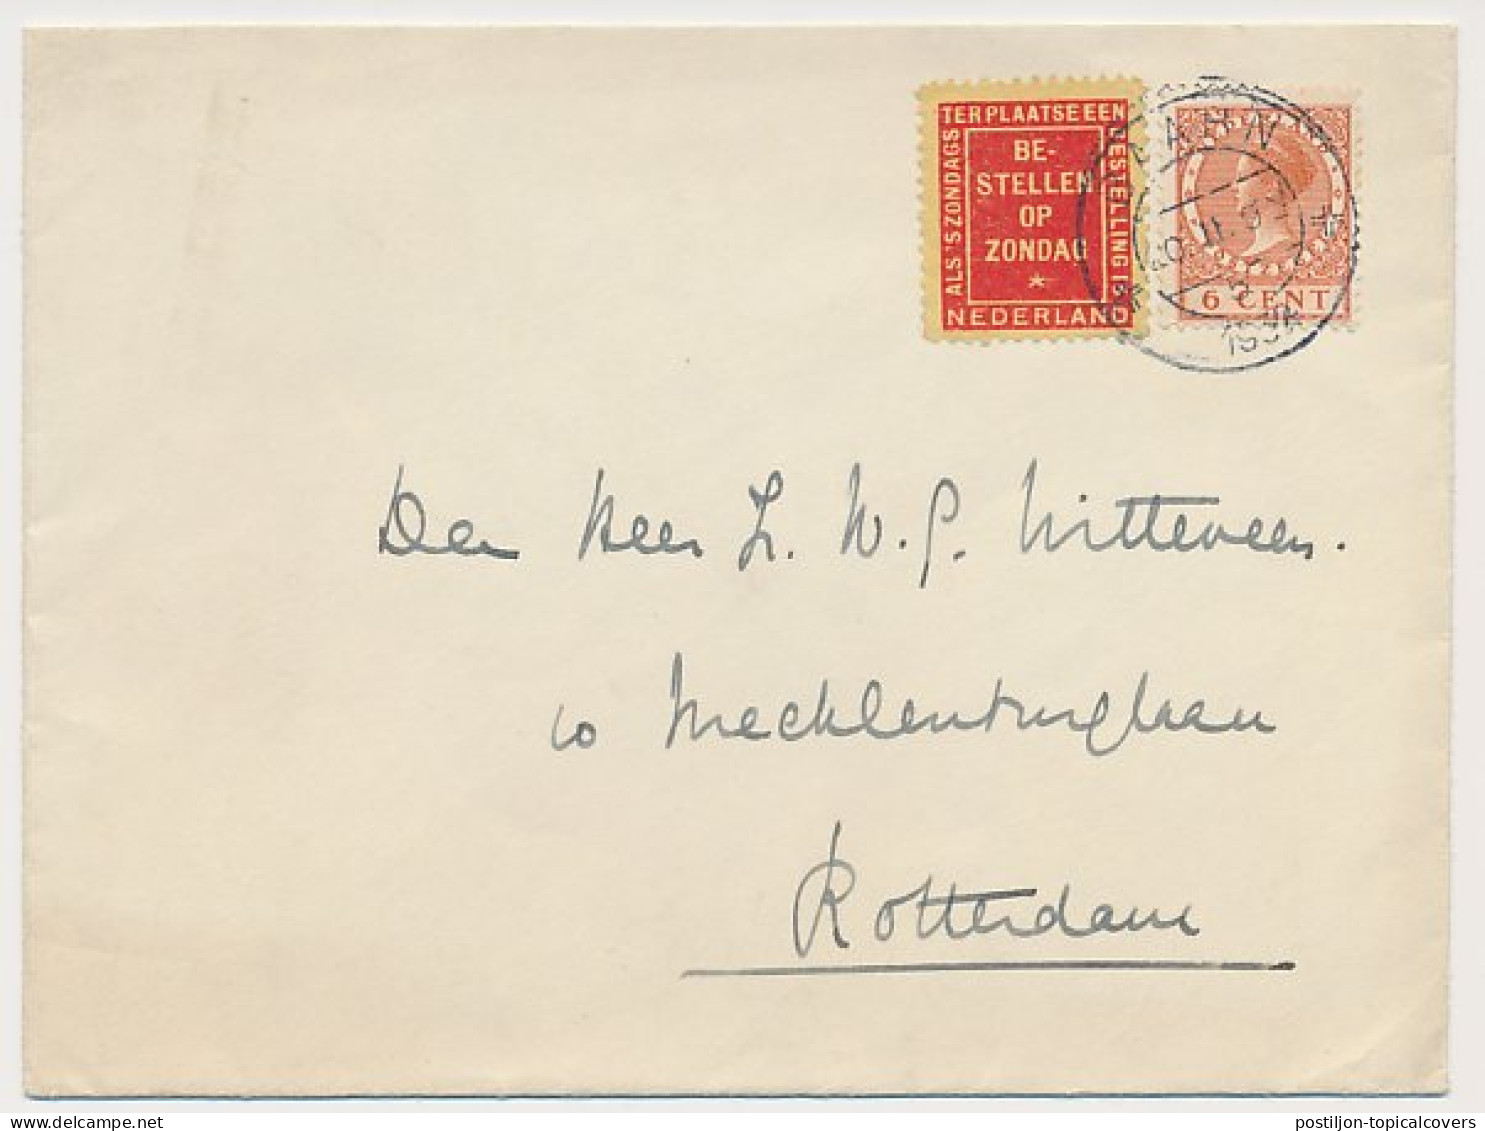 Bestellen Op Zondag - Baarn - Rotterdam 1932 - Covers & Documents